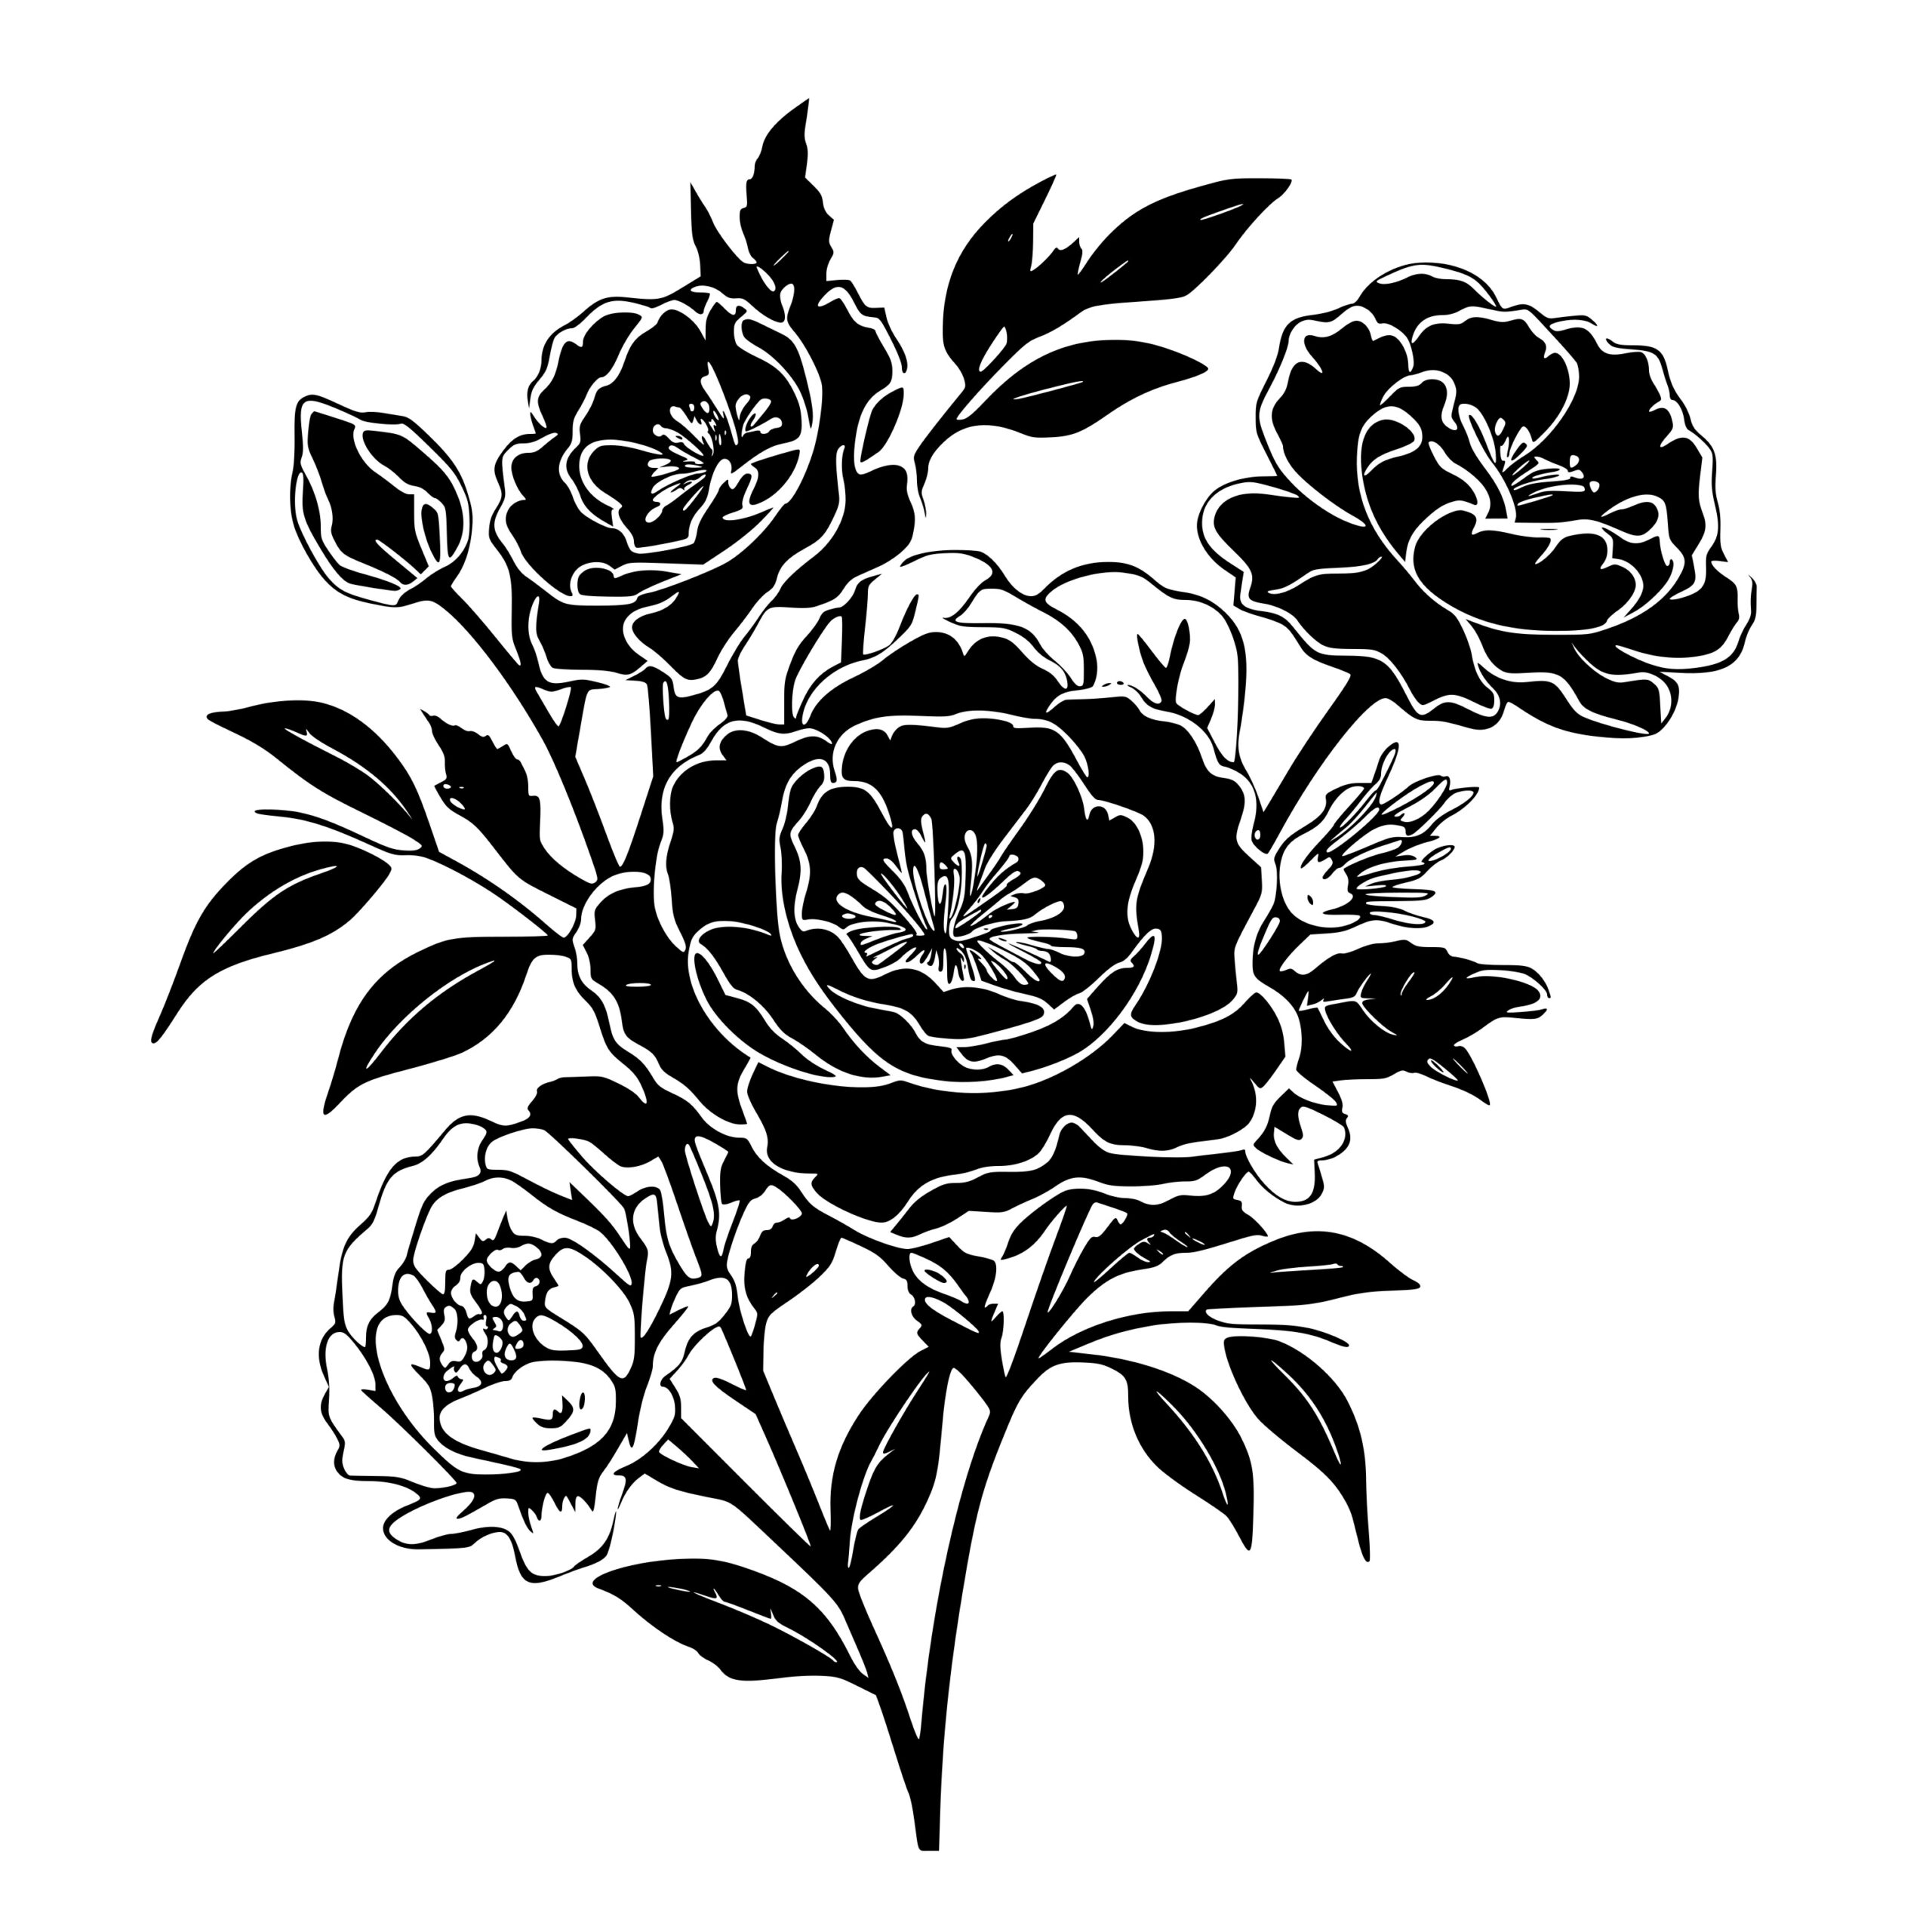 Cricut Silhouette Camellia Arrangement: SVG, PNG, DXF Files for Crafts